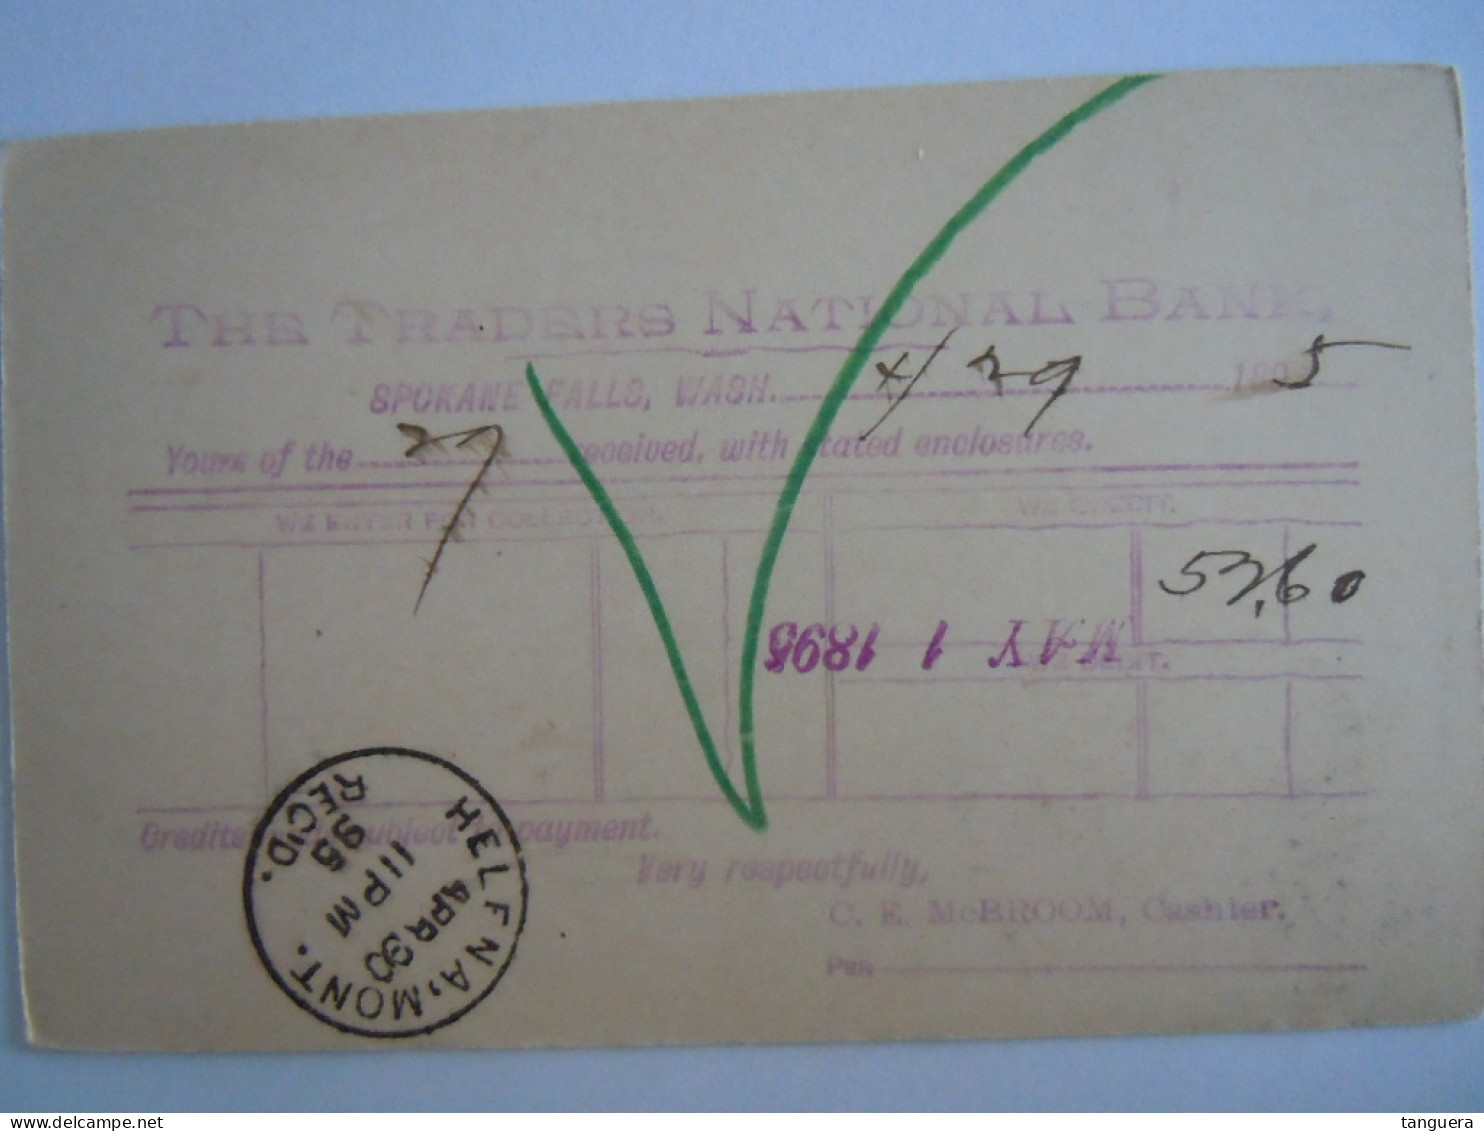 USA Apr 1895 Scott UX12 Postal Card Spokane Falls, Wash To Helena, Mont Entier Ganzsache - ...-1900